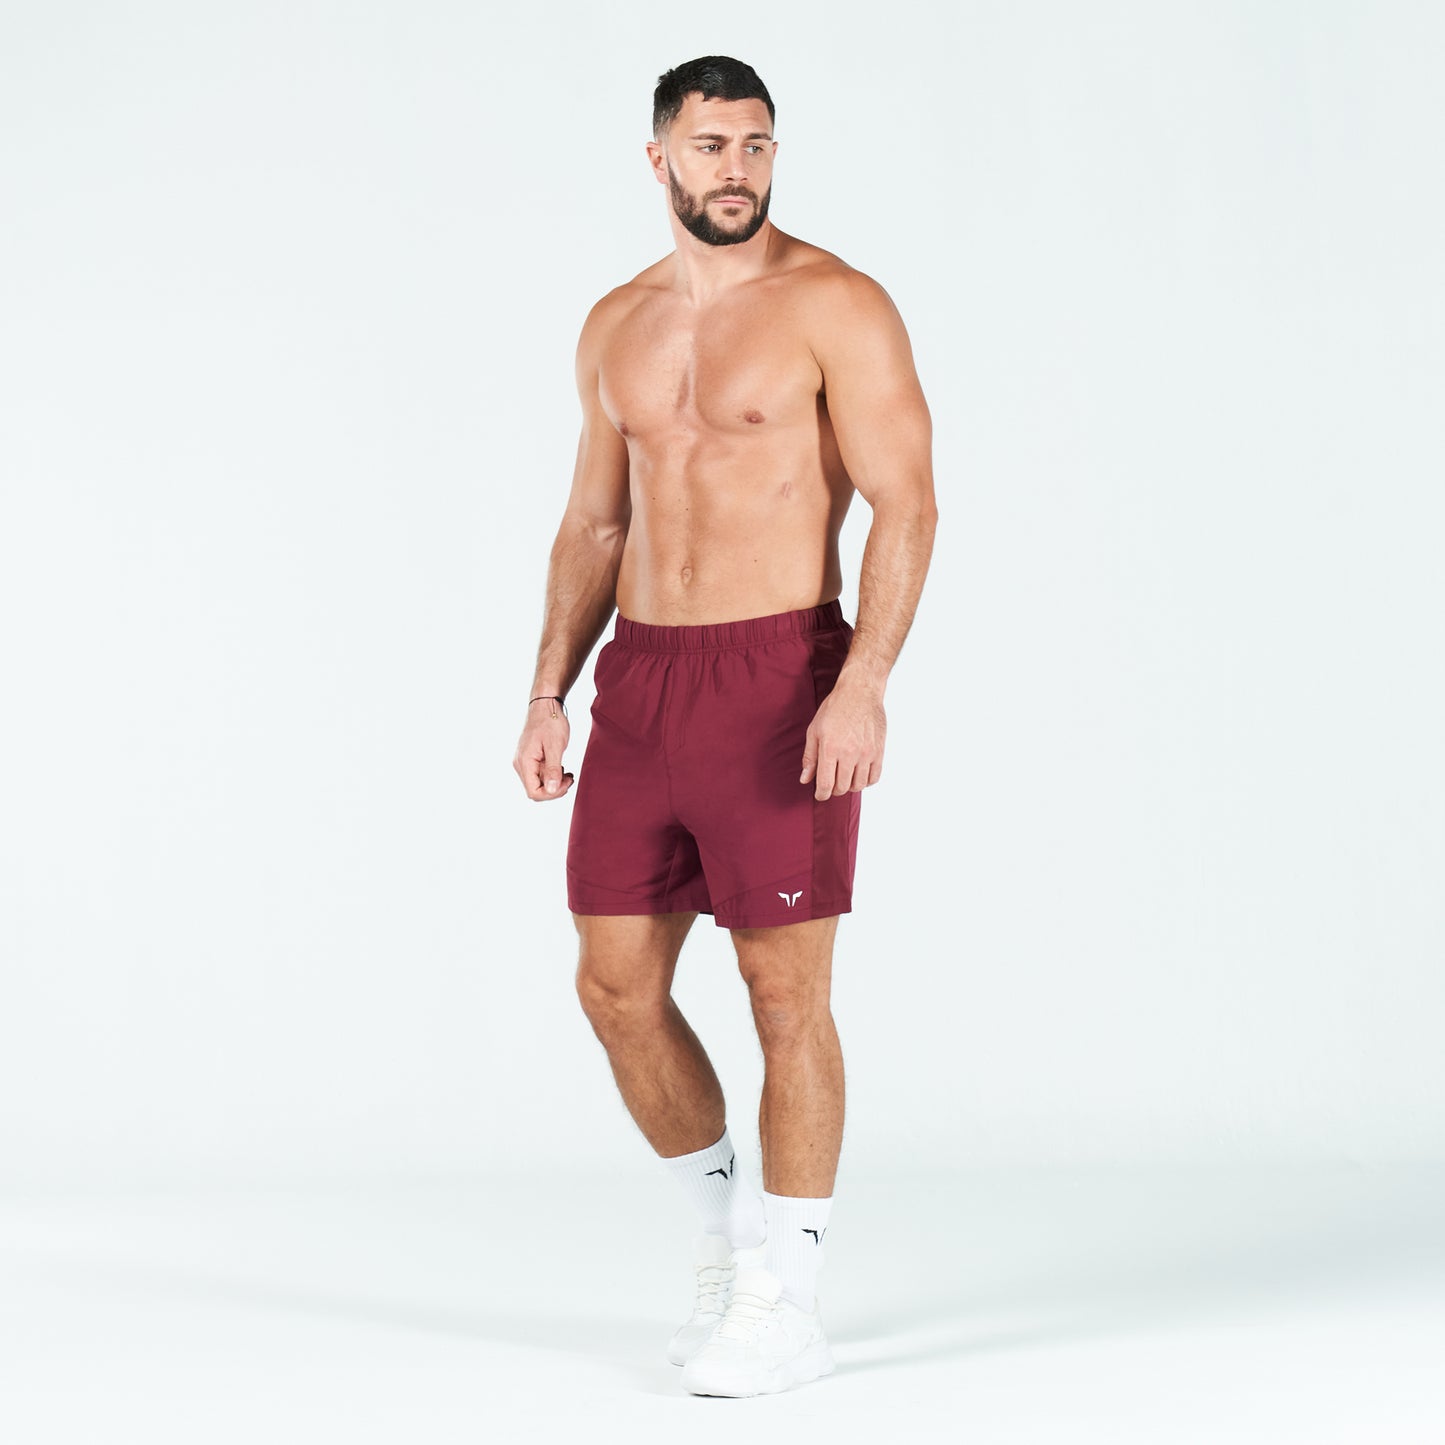 squatwolf-gym-wear-statement-quick-dry-shorts-burgundy-workout-short-for-men